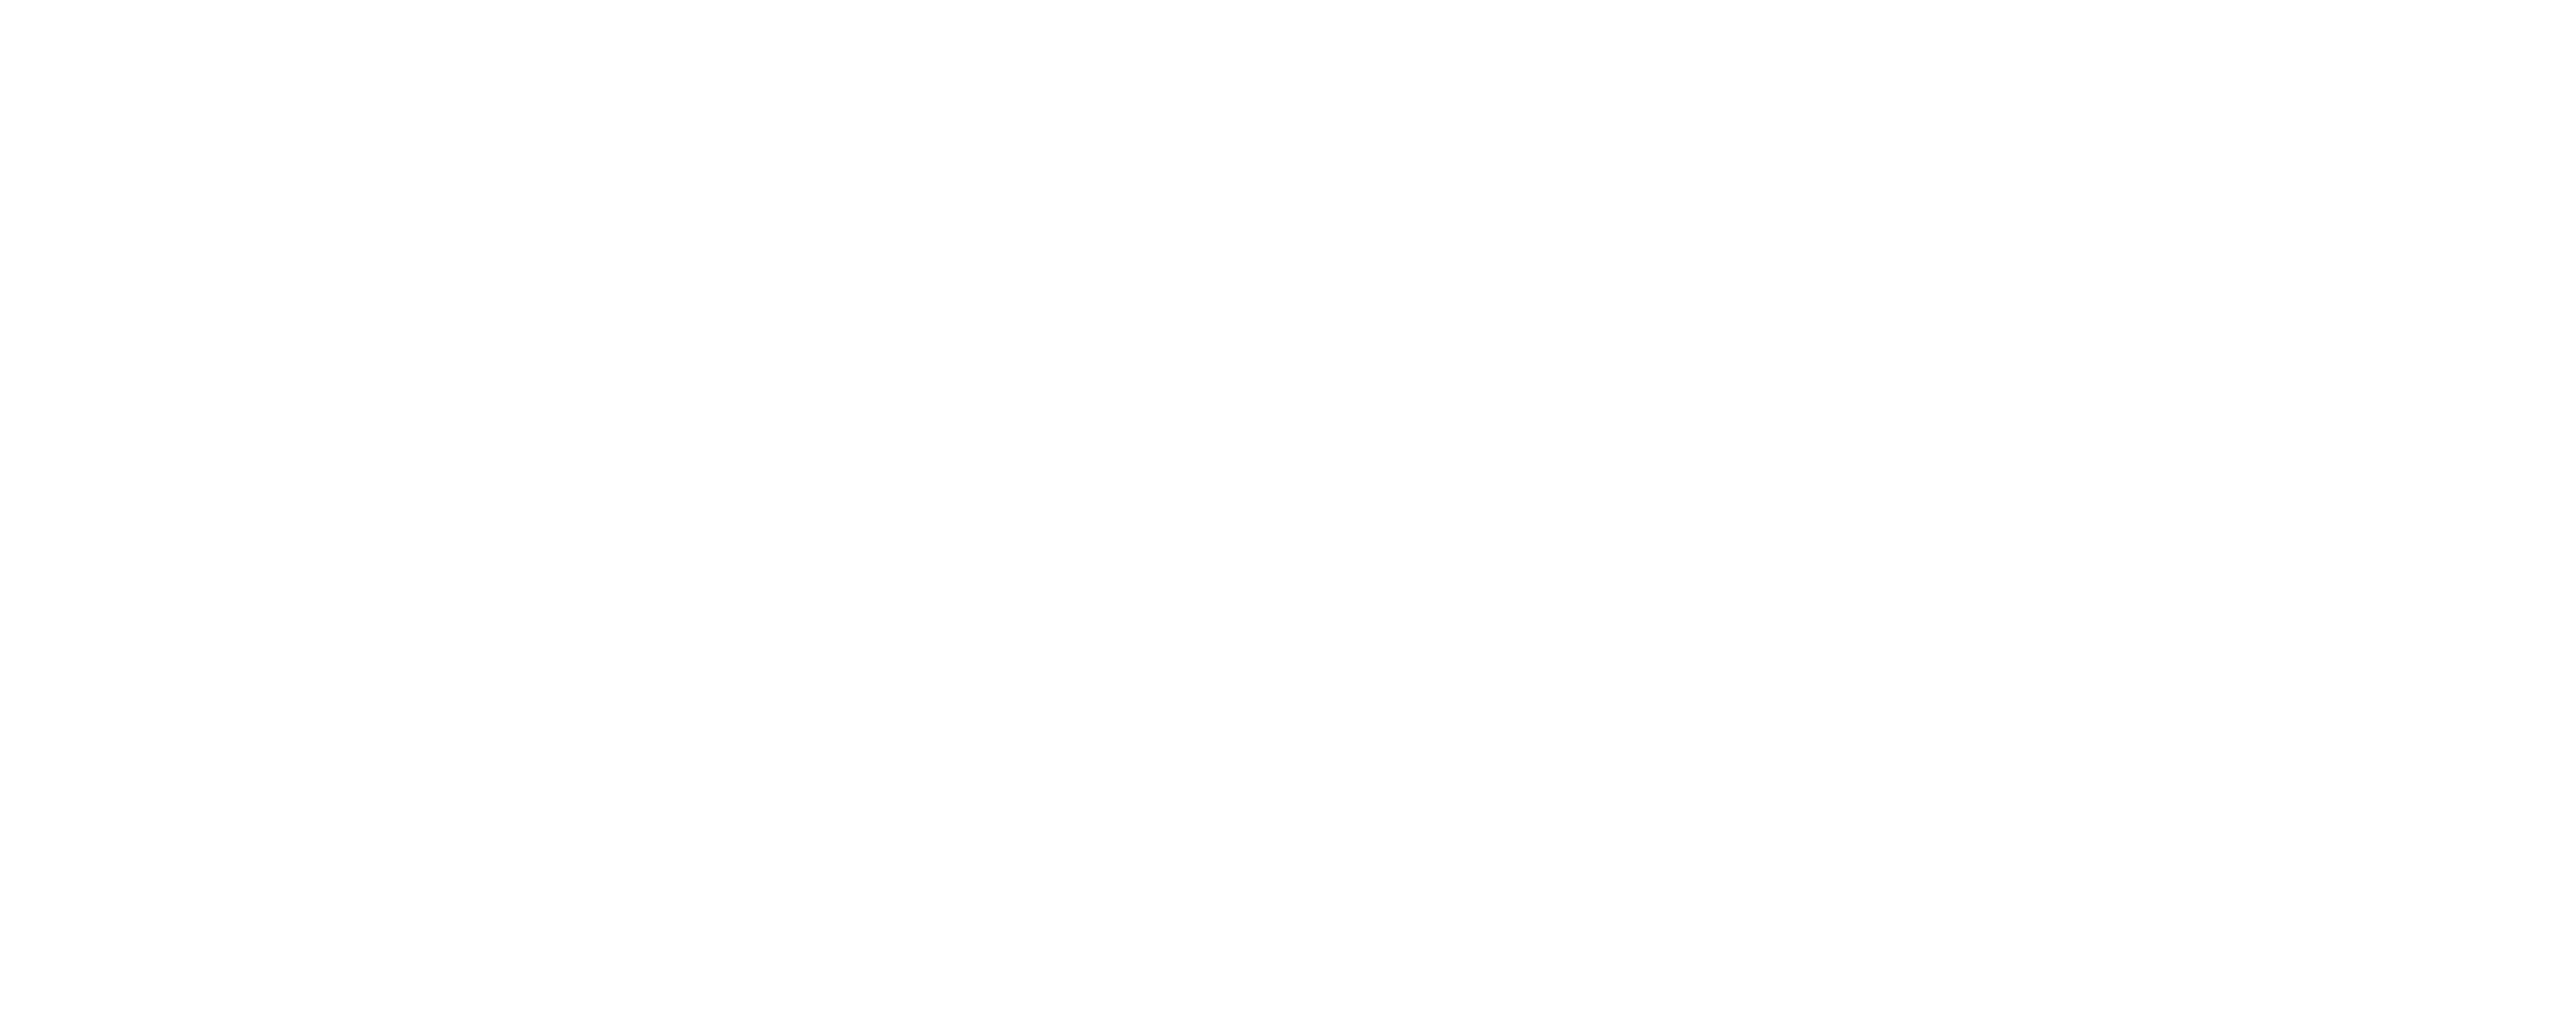 HYROAD RADIO